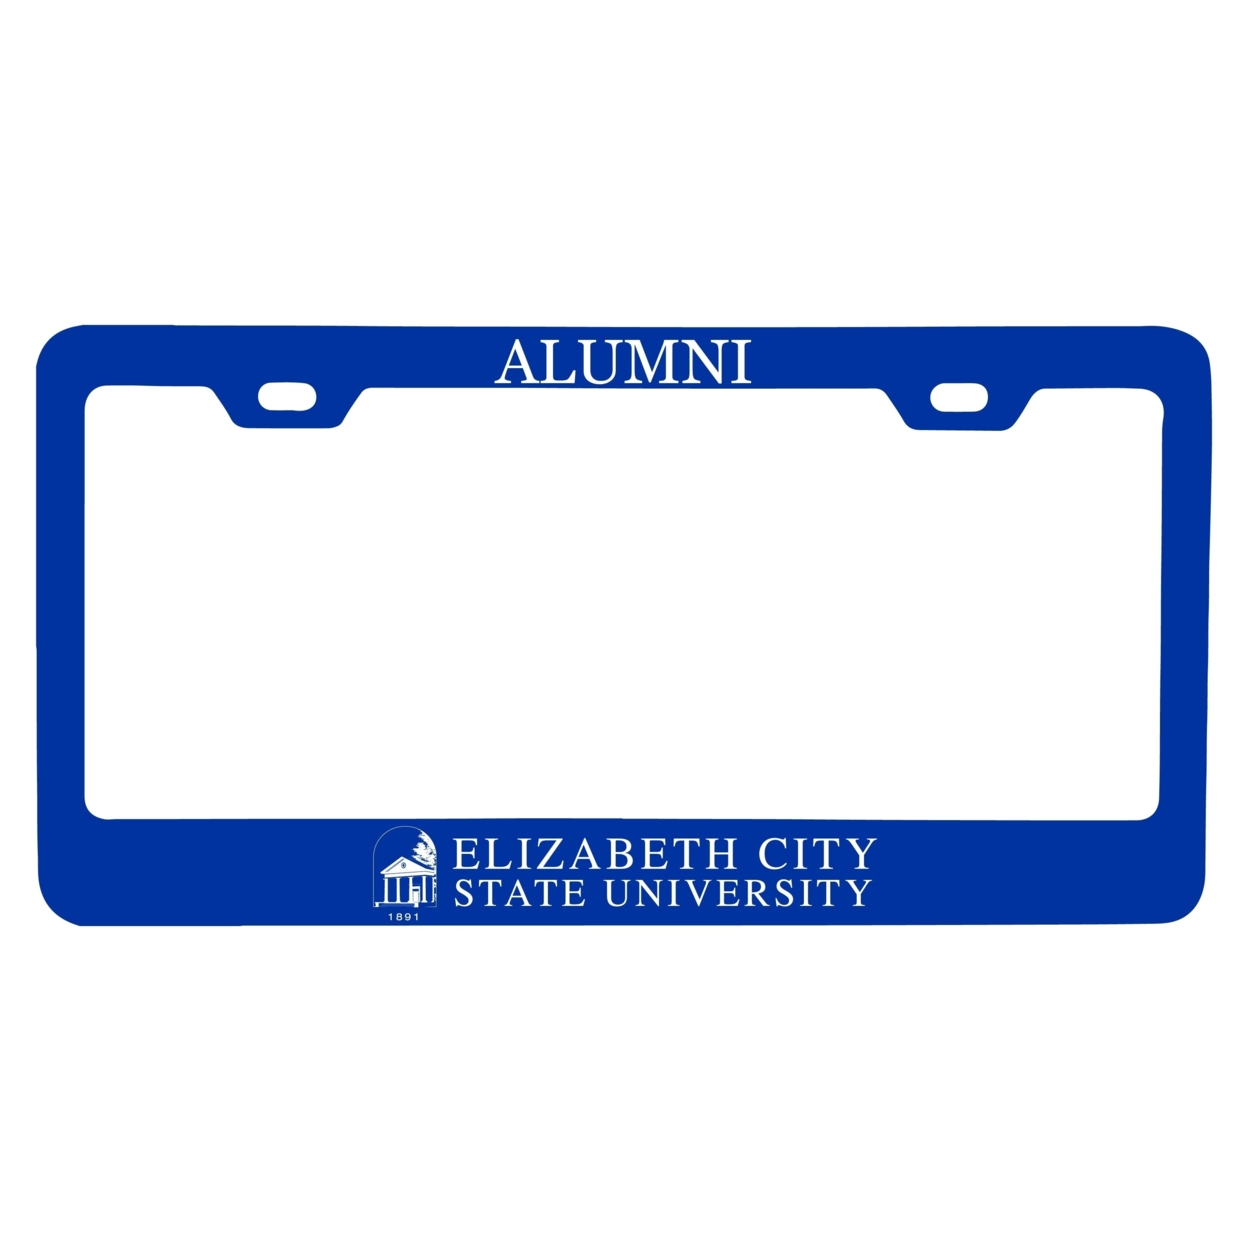 Elizabeth City State University Alumni License Plate Frame